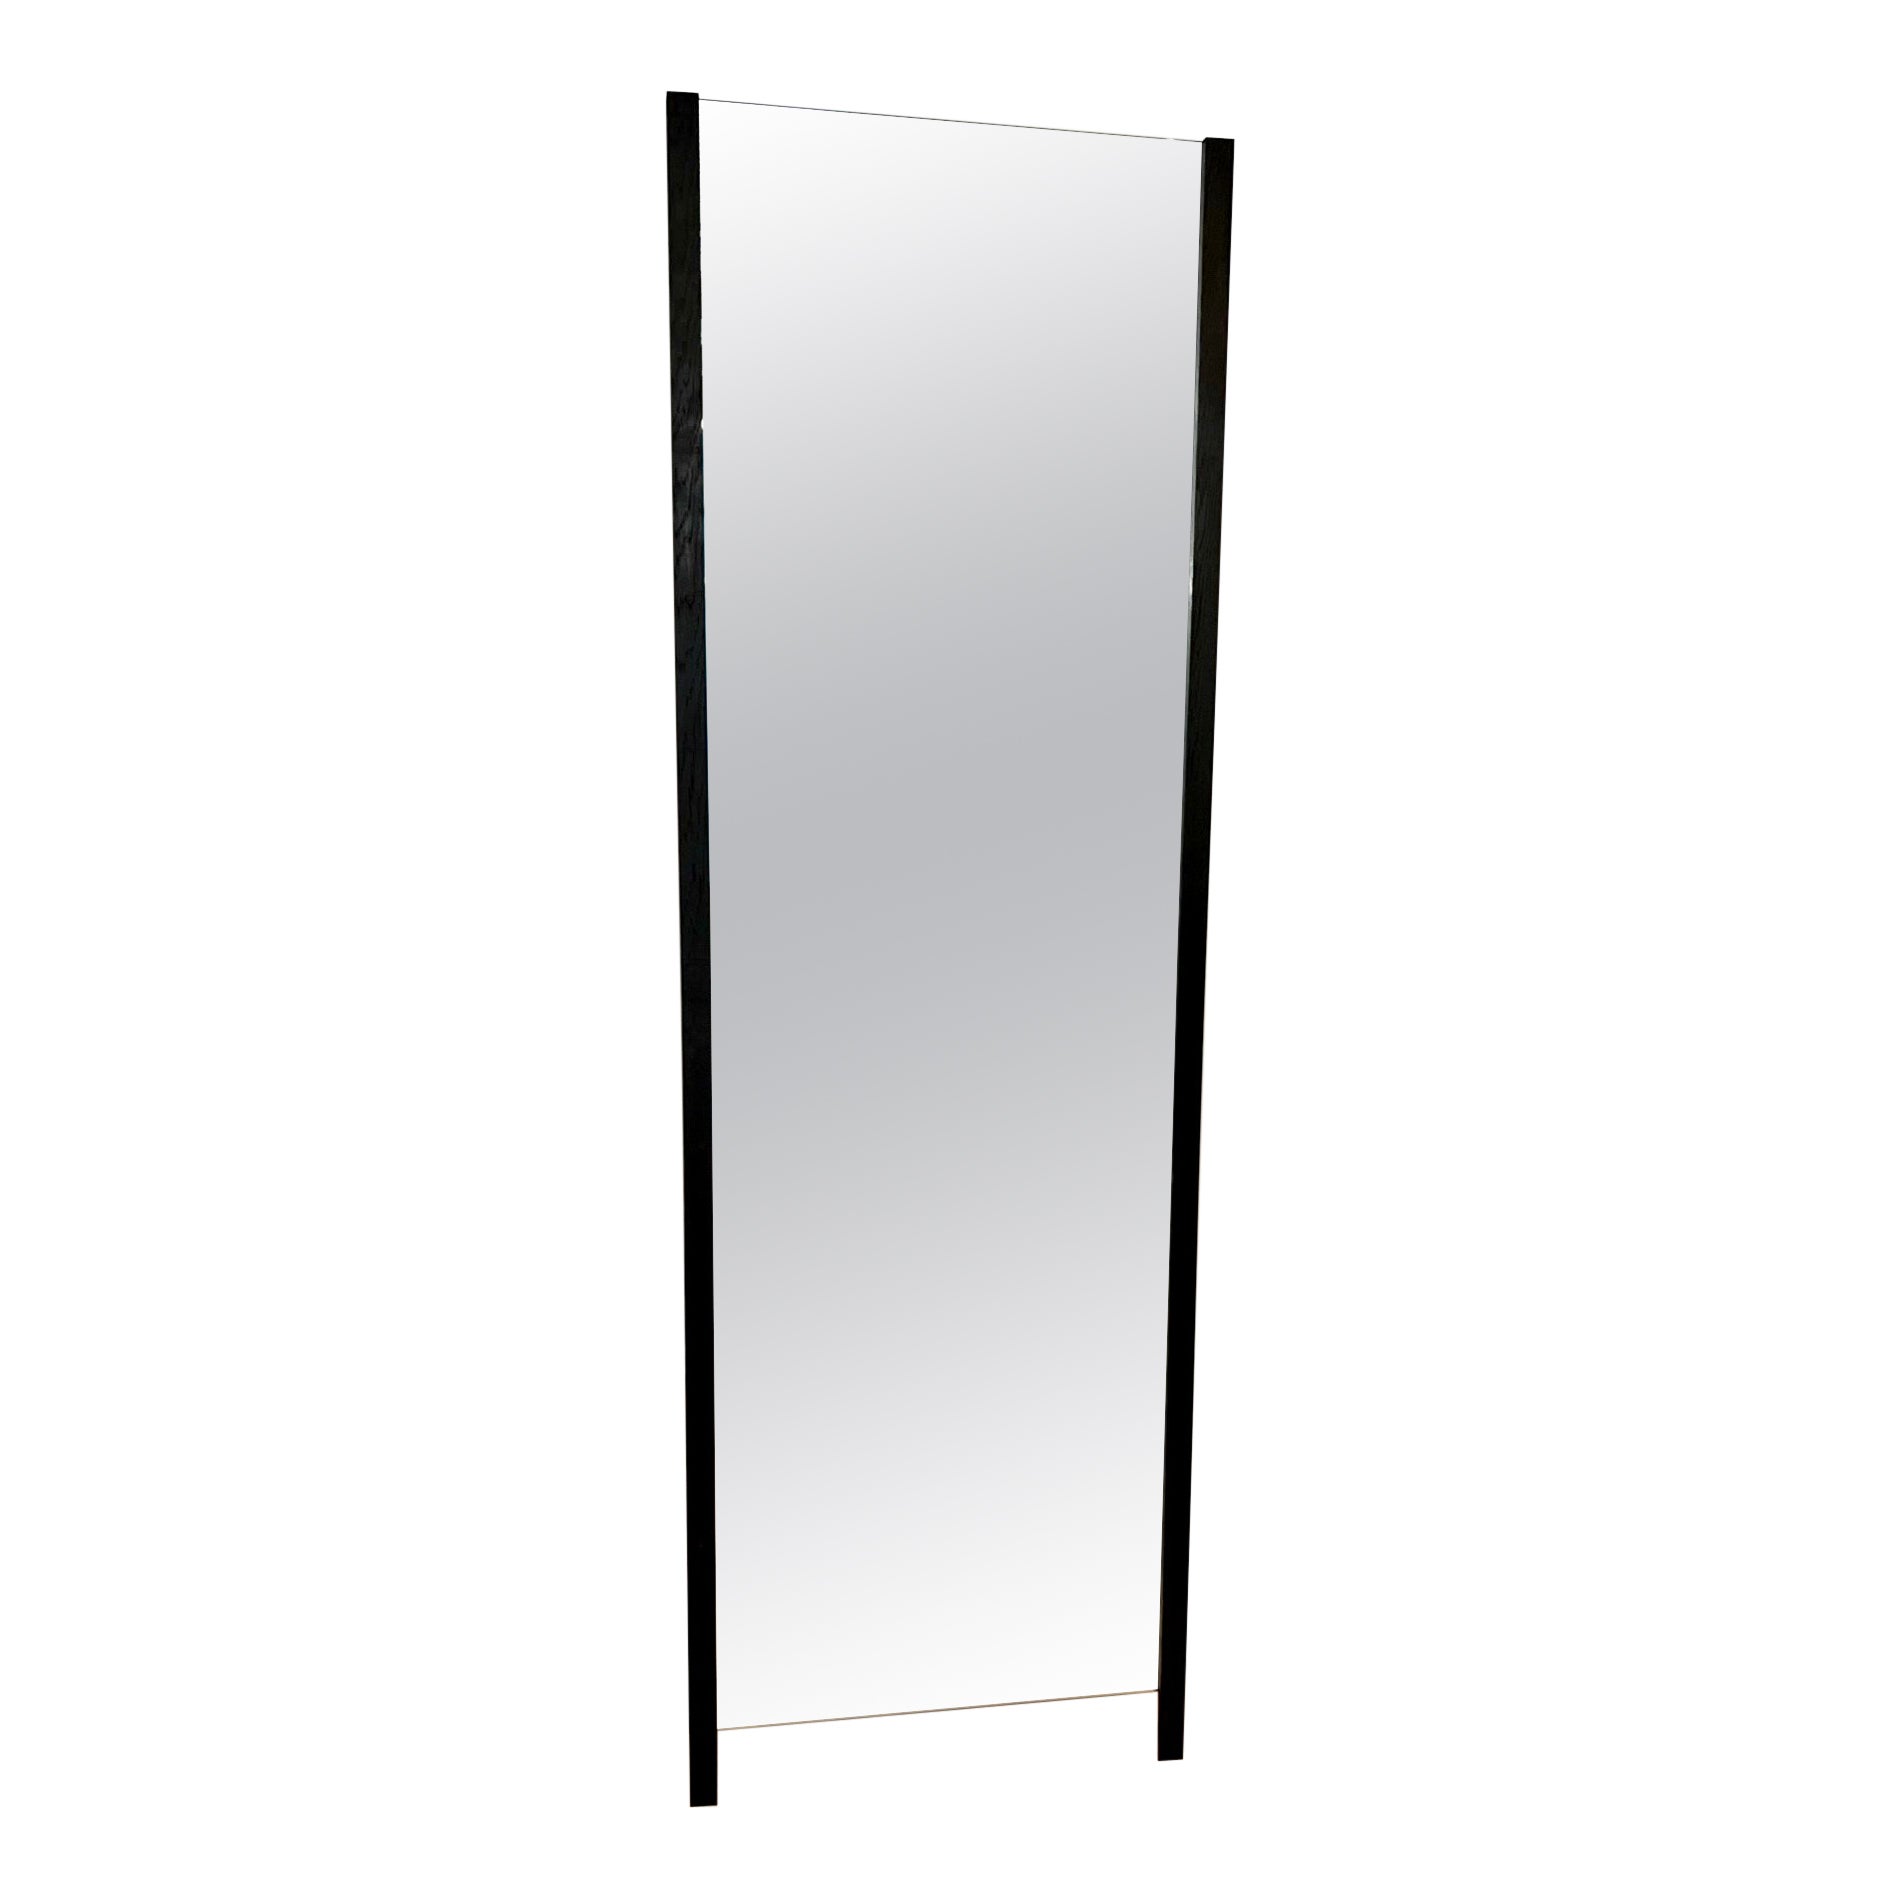 Miroir Crura grand format minimaliste sur pied